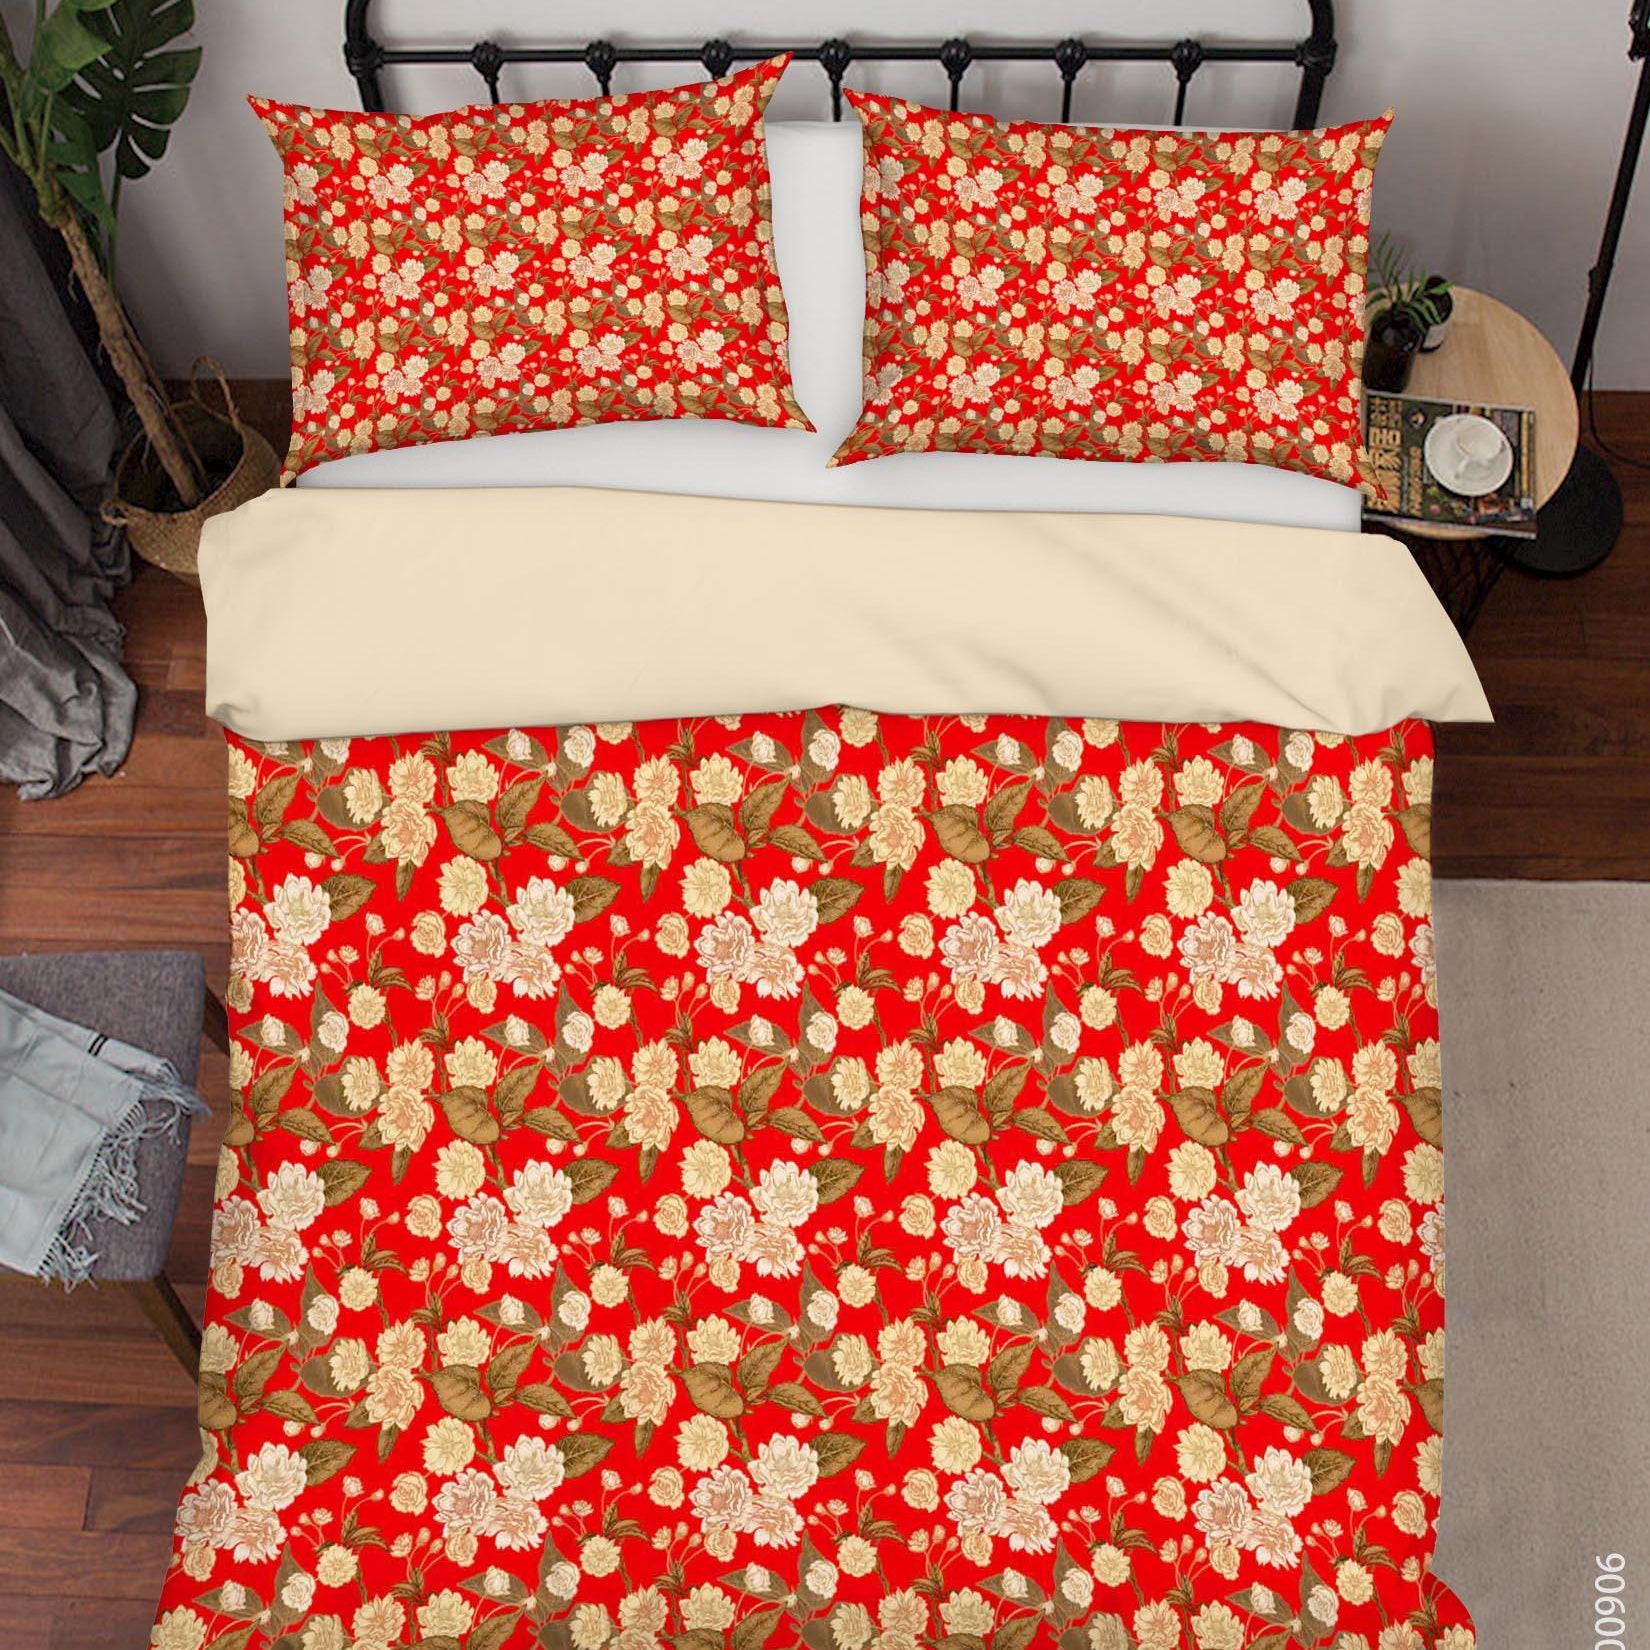 3D Vintage Red Leaves Pattern Quilt Cover Set Bedding Set Duvet Cover Pillowcases WJ 3608- Jess Art Decoration